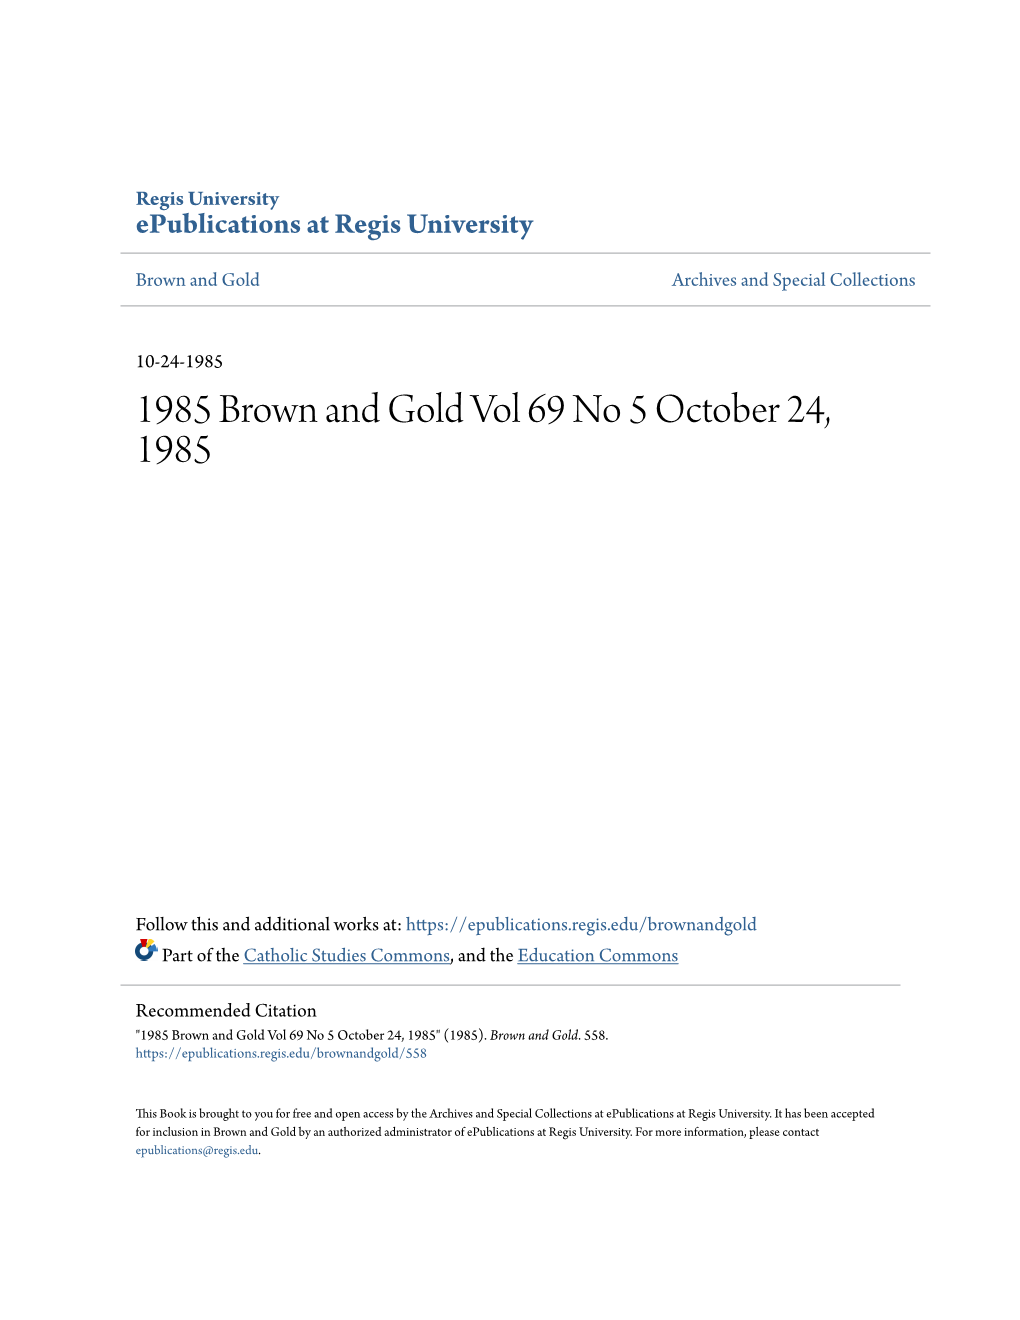 1985 Brown and Gold Vol 69 No 5 October 24, 1985